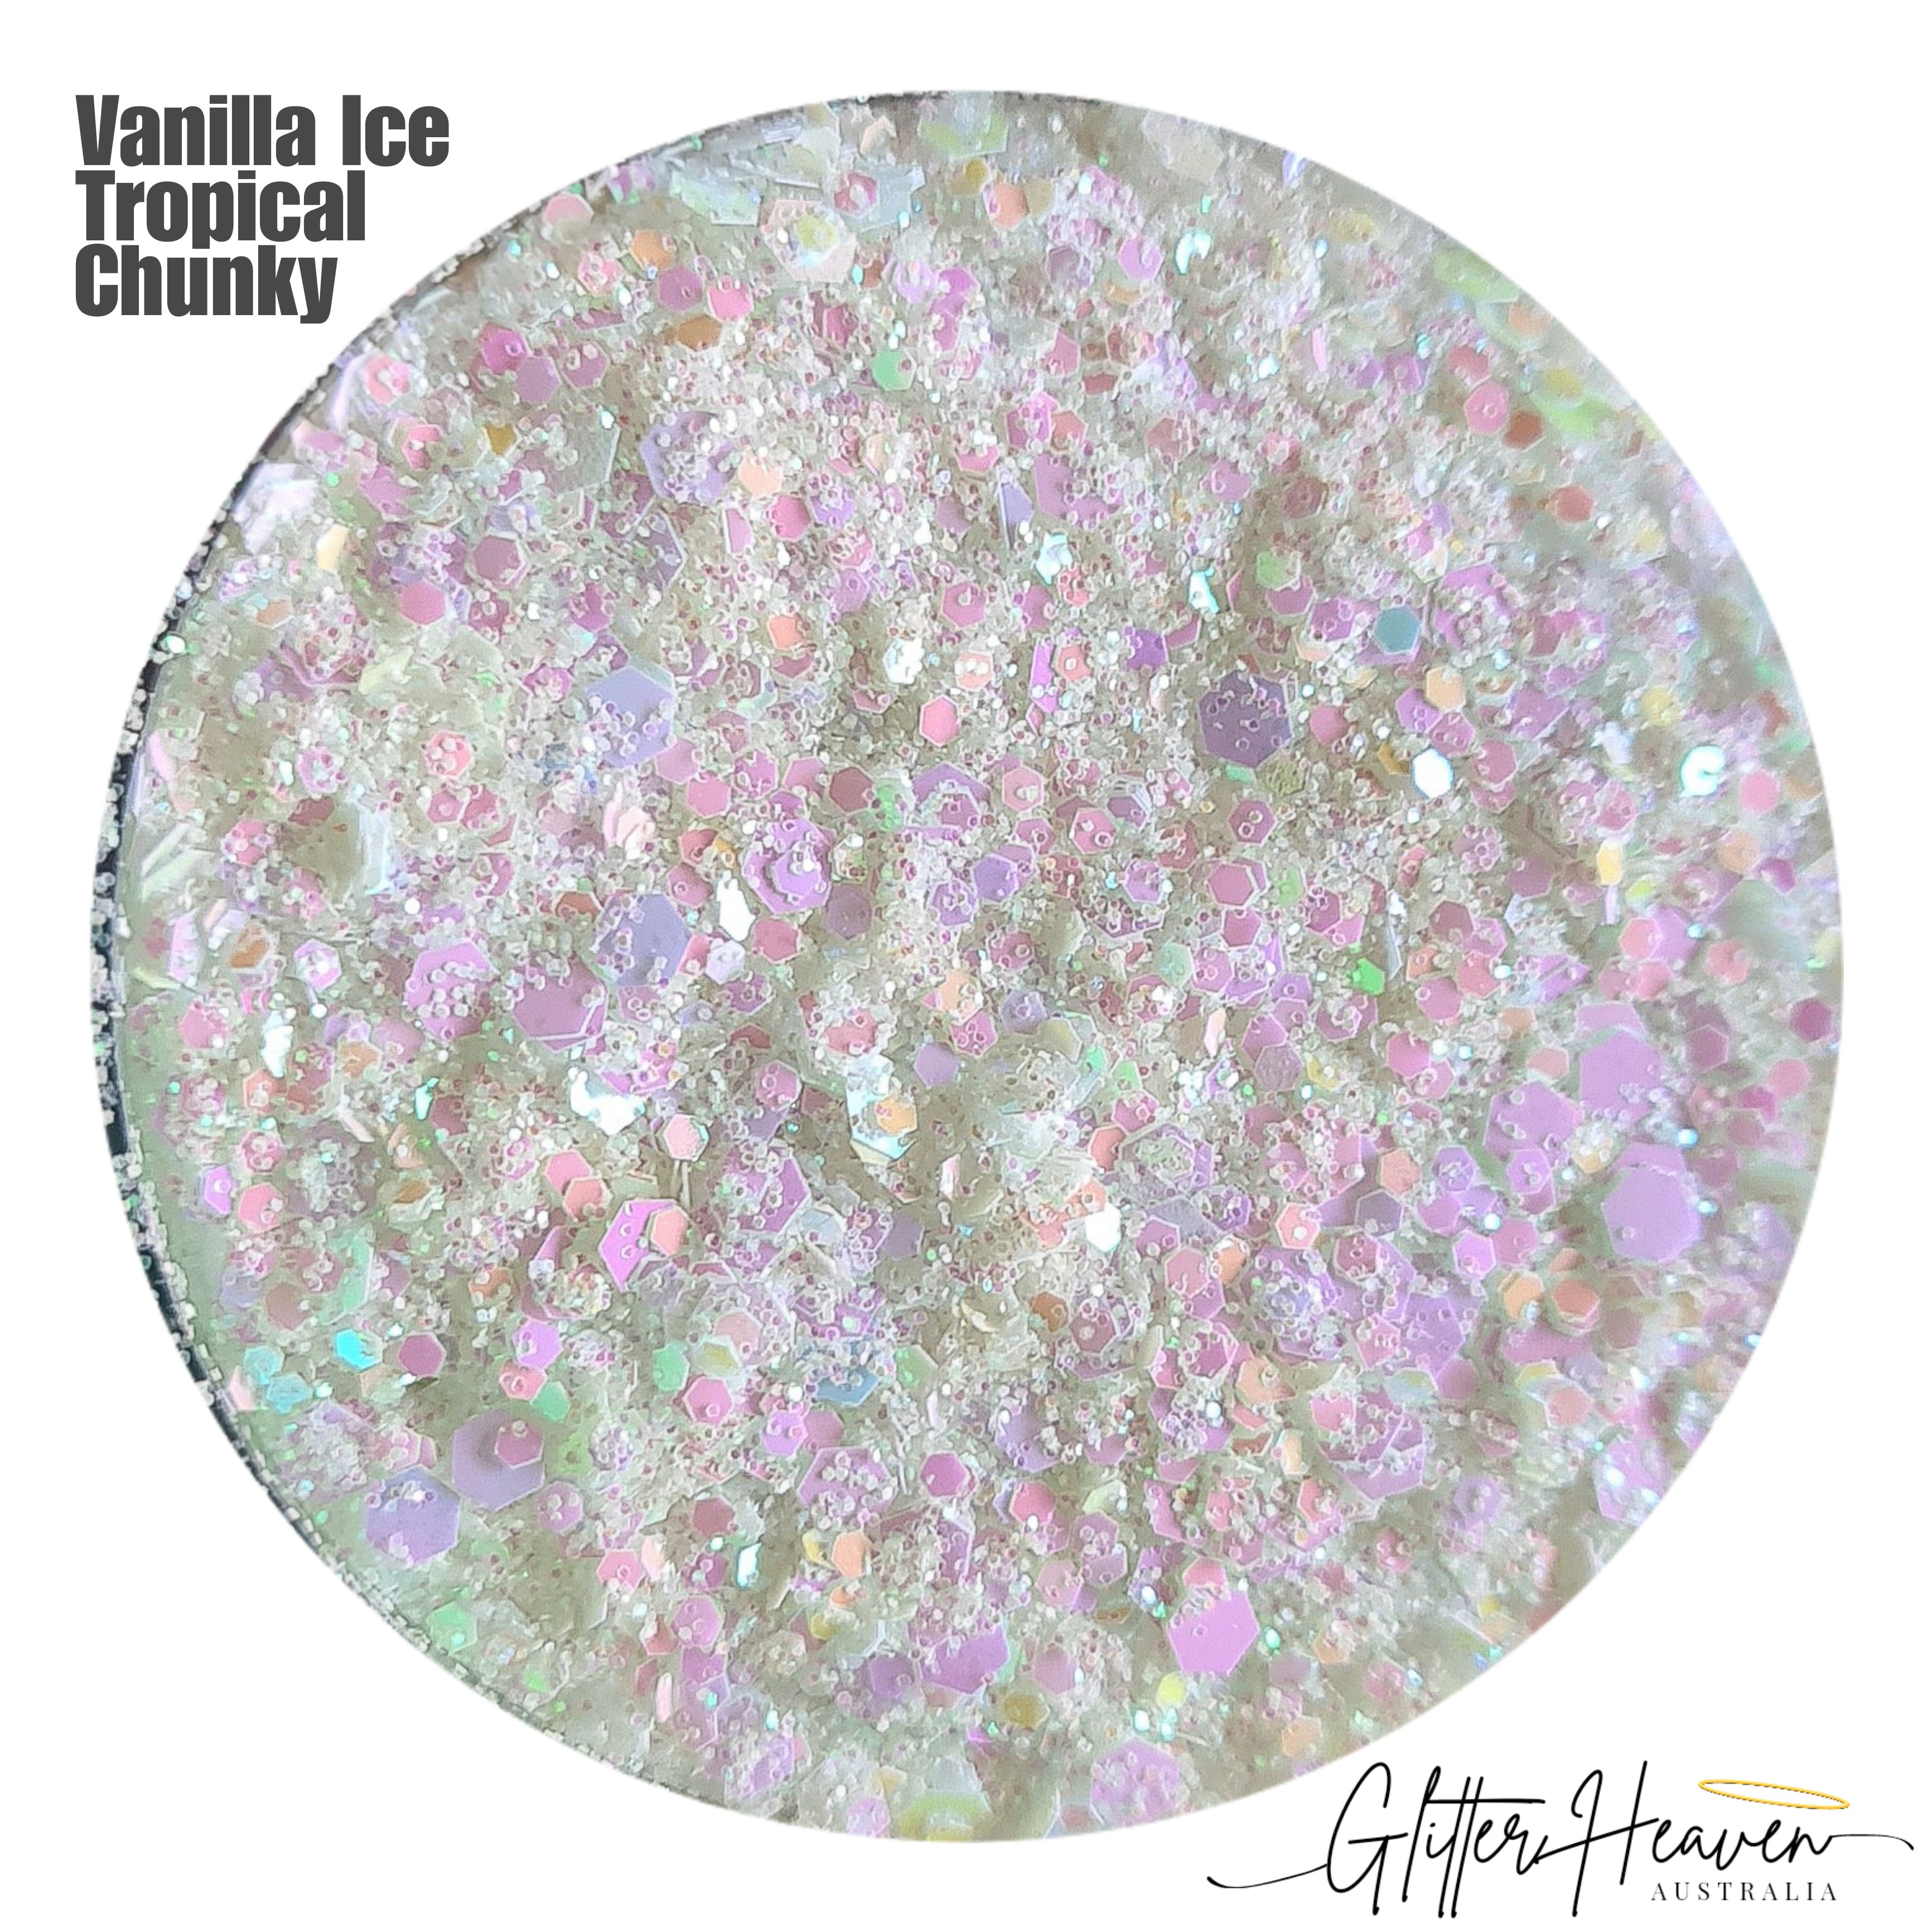 Vanilla Ice Chunky Tropical